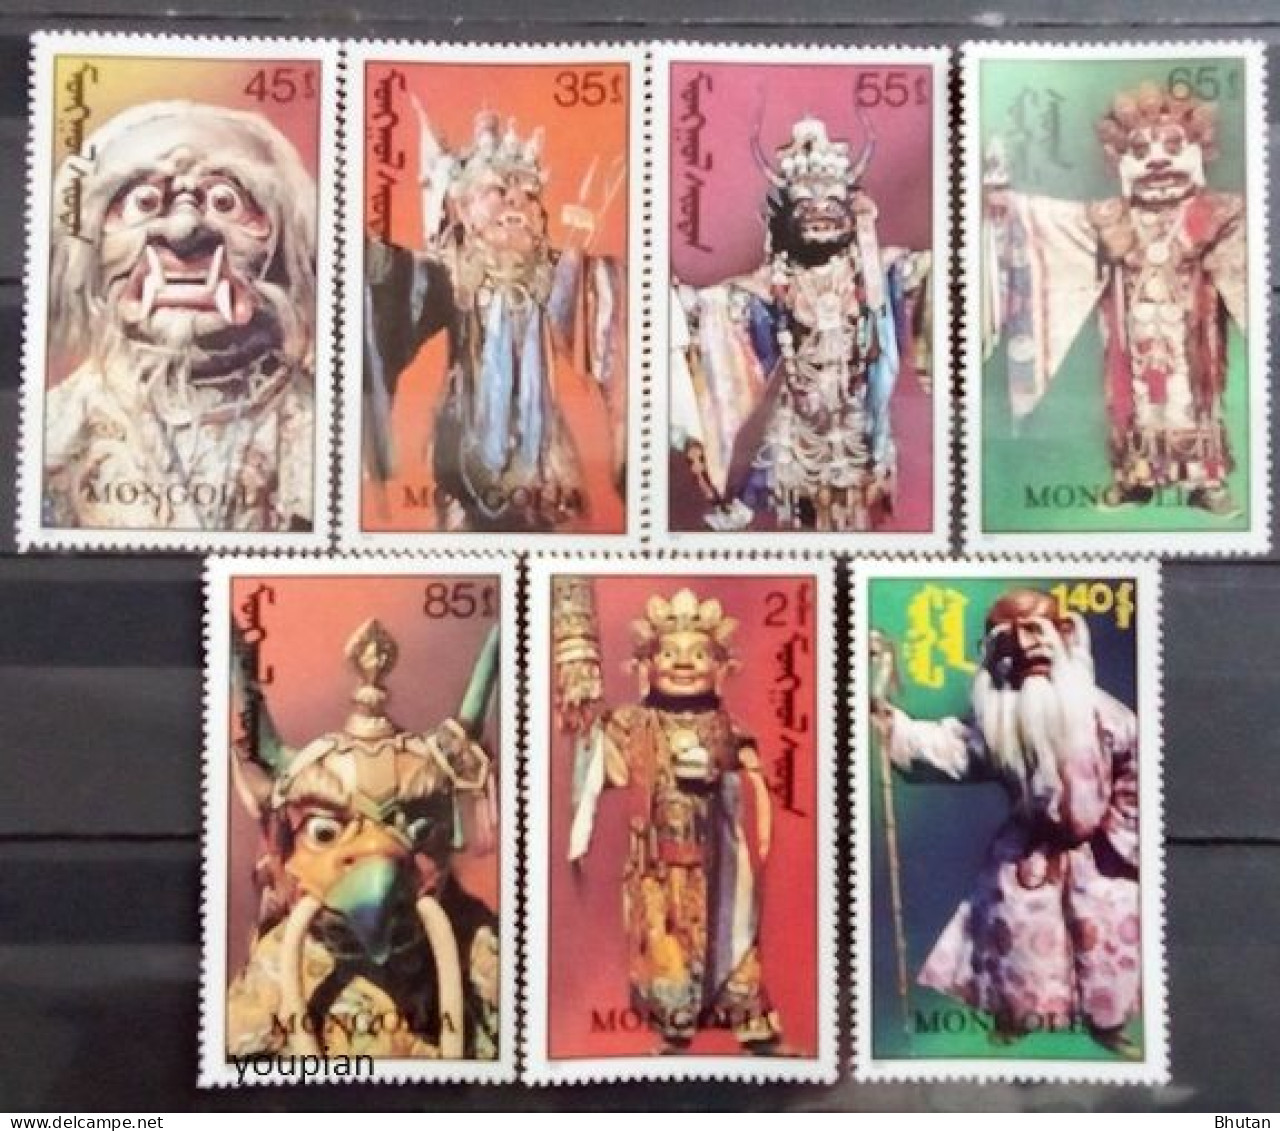 Mongolia 1991, Mongolian Tsam Dance Masks, MNH Stamps Set - Mongolei